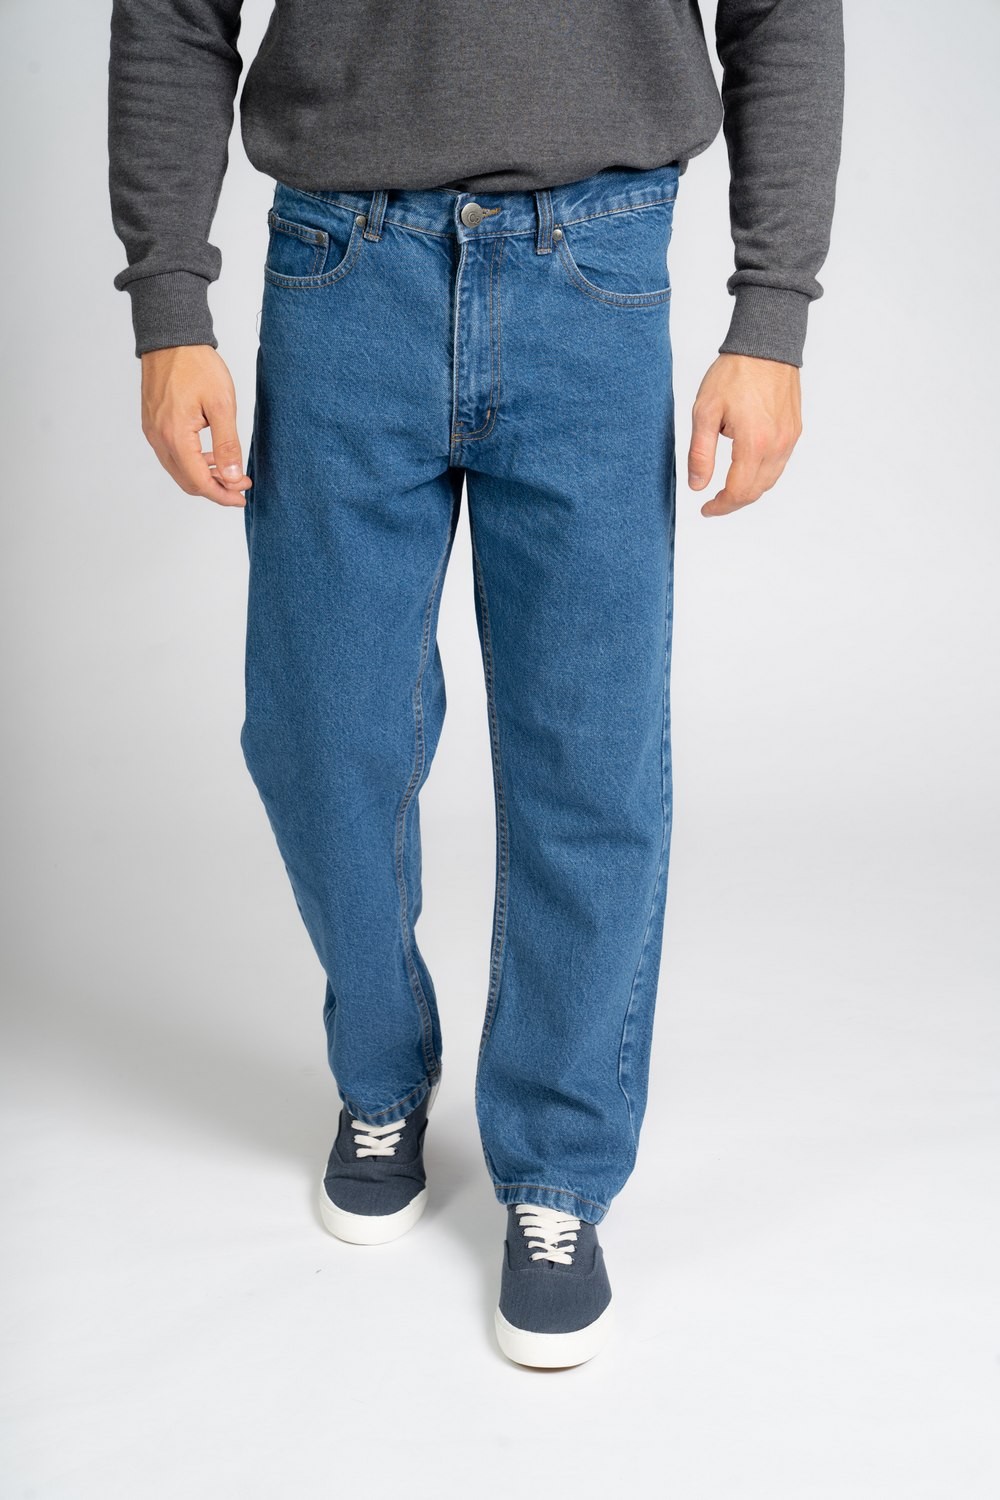 Carabou Jeans ACJ waist size 32R